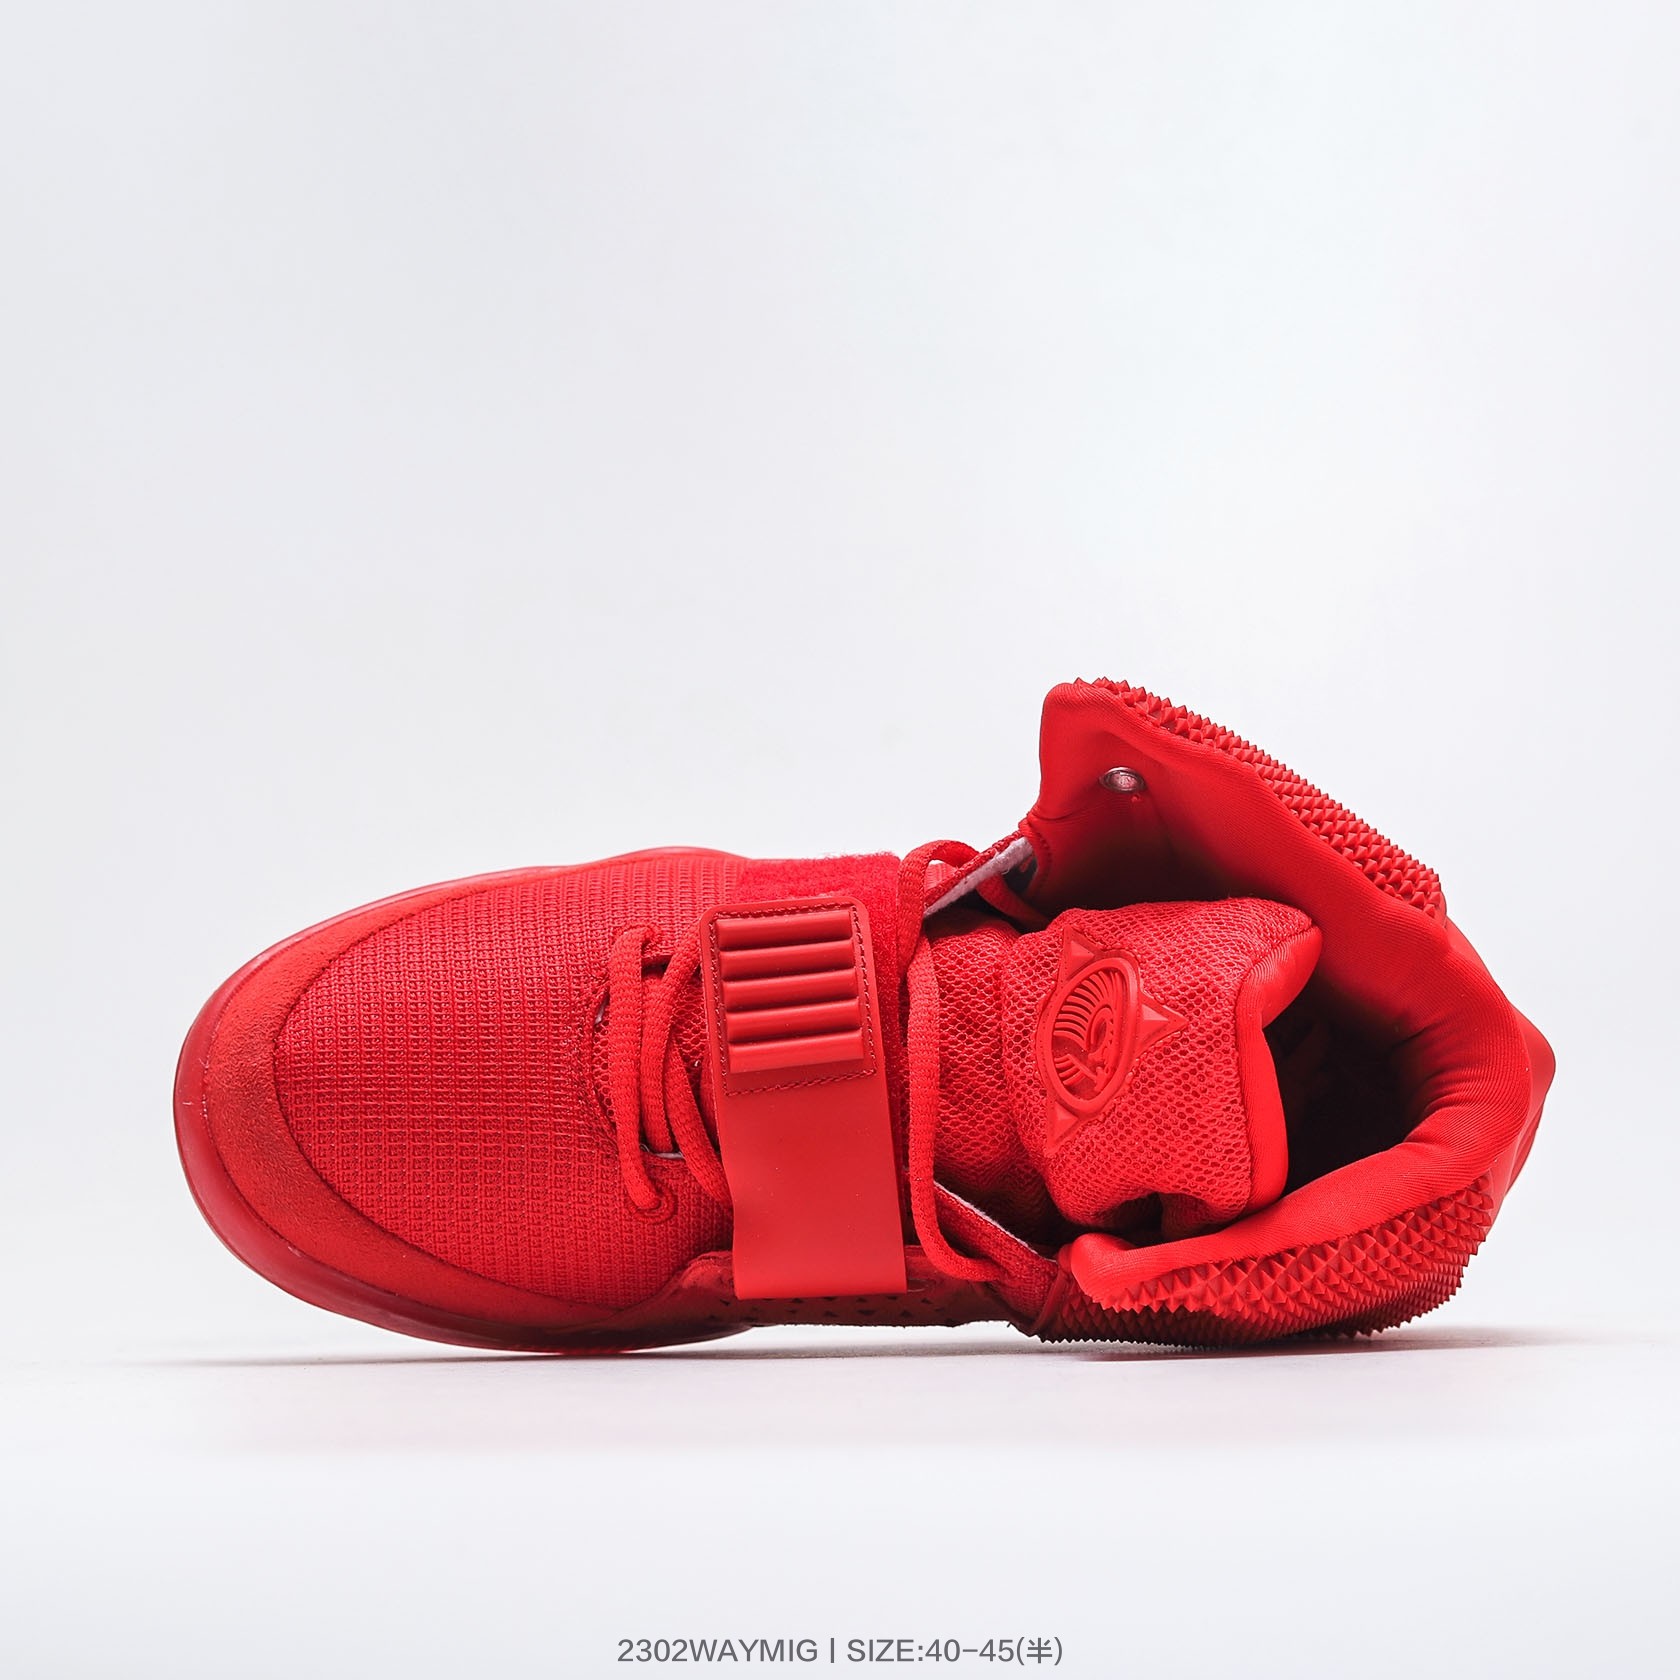 Nike Air Yeezy 2 Red October Men's - 508214-660 - US